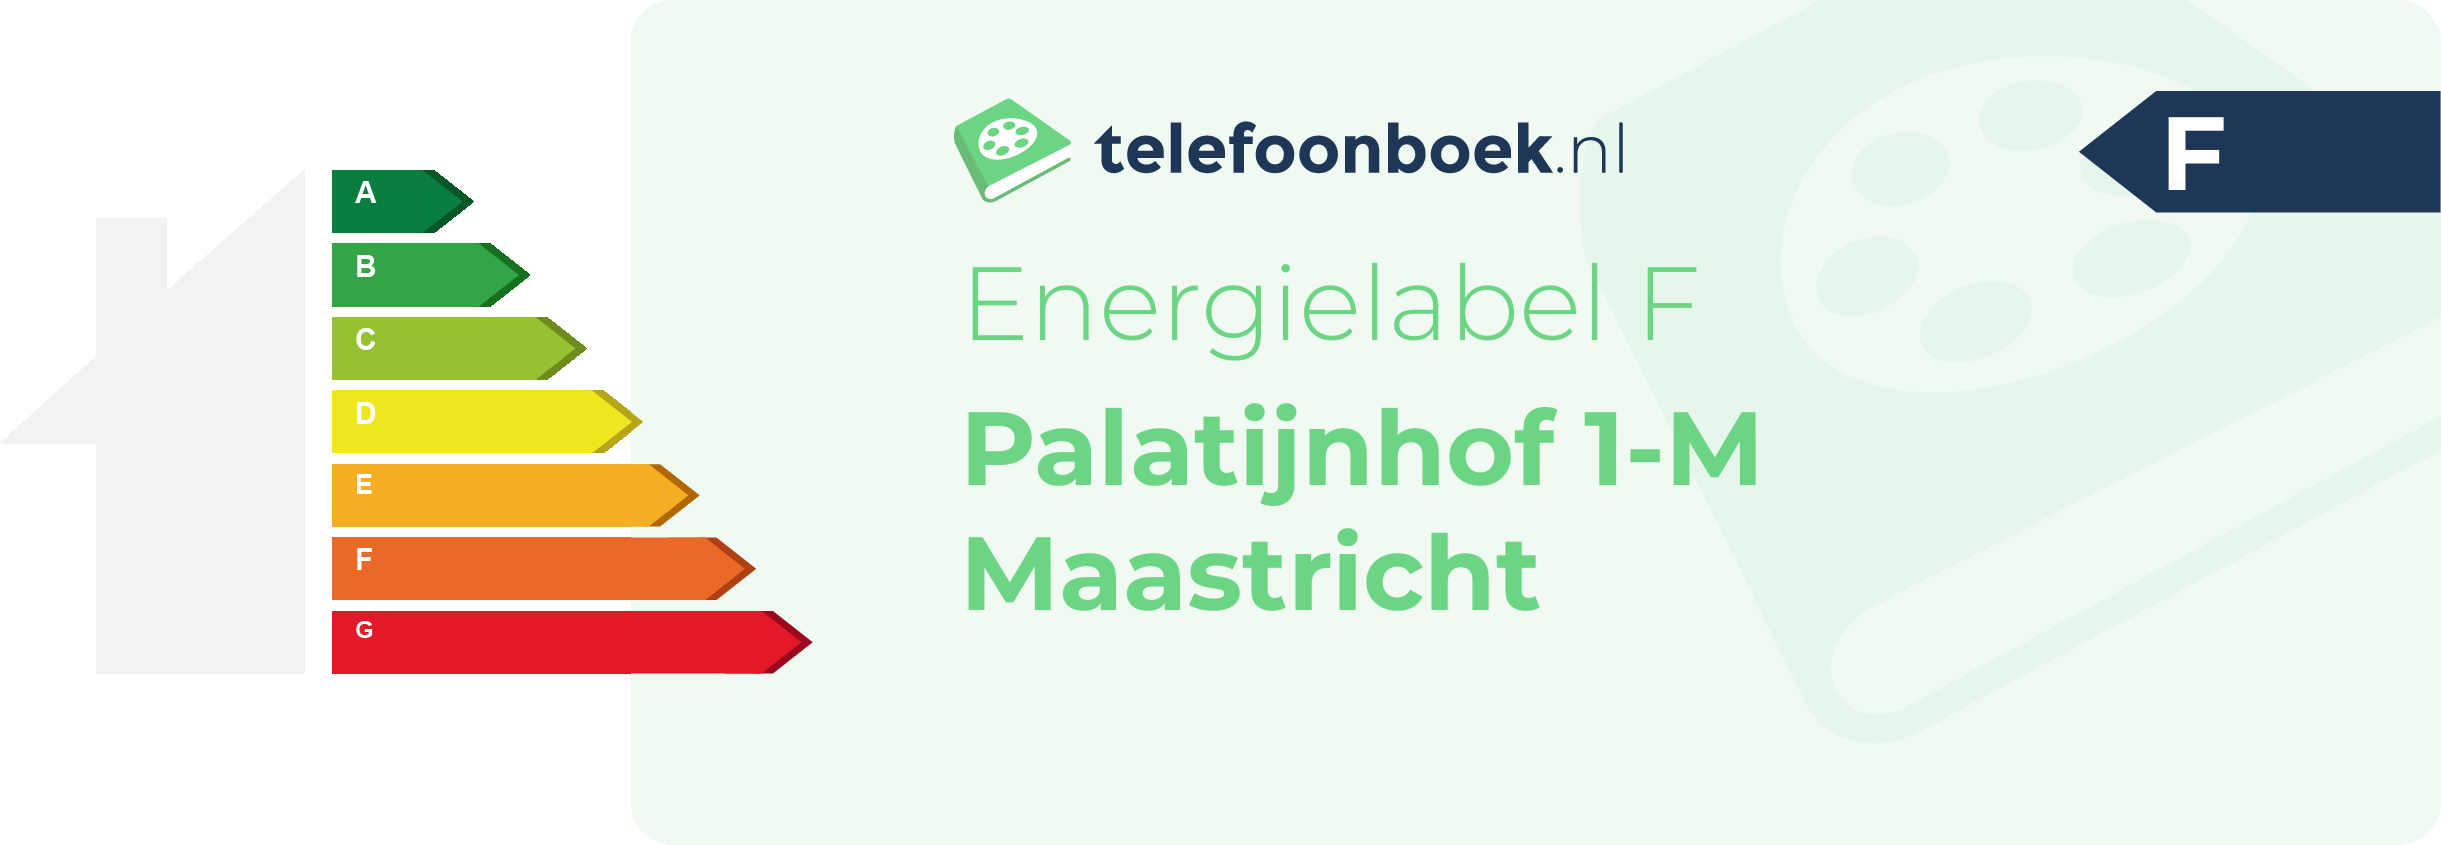 Energielabel Palatijnhof 1-M Maastricht